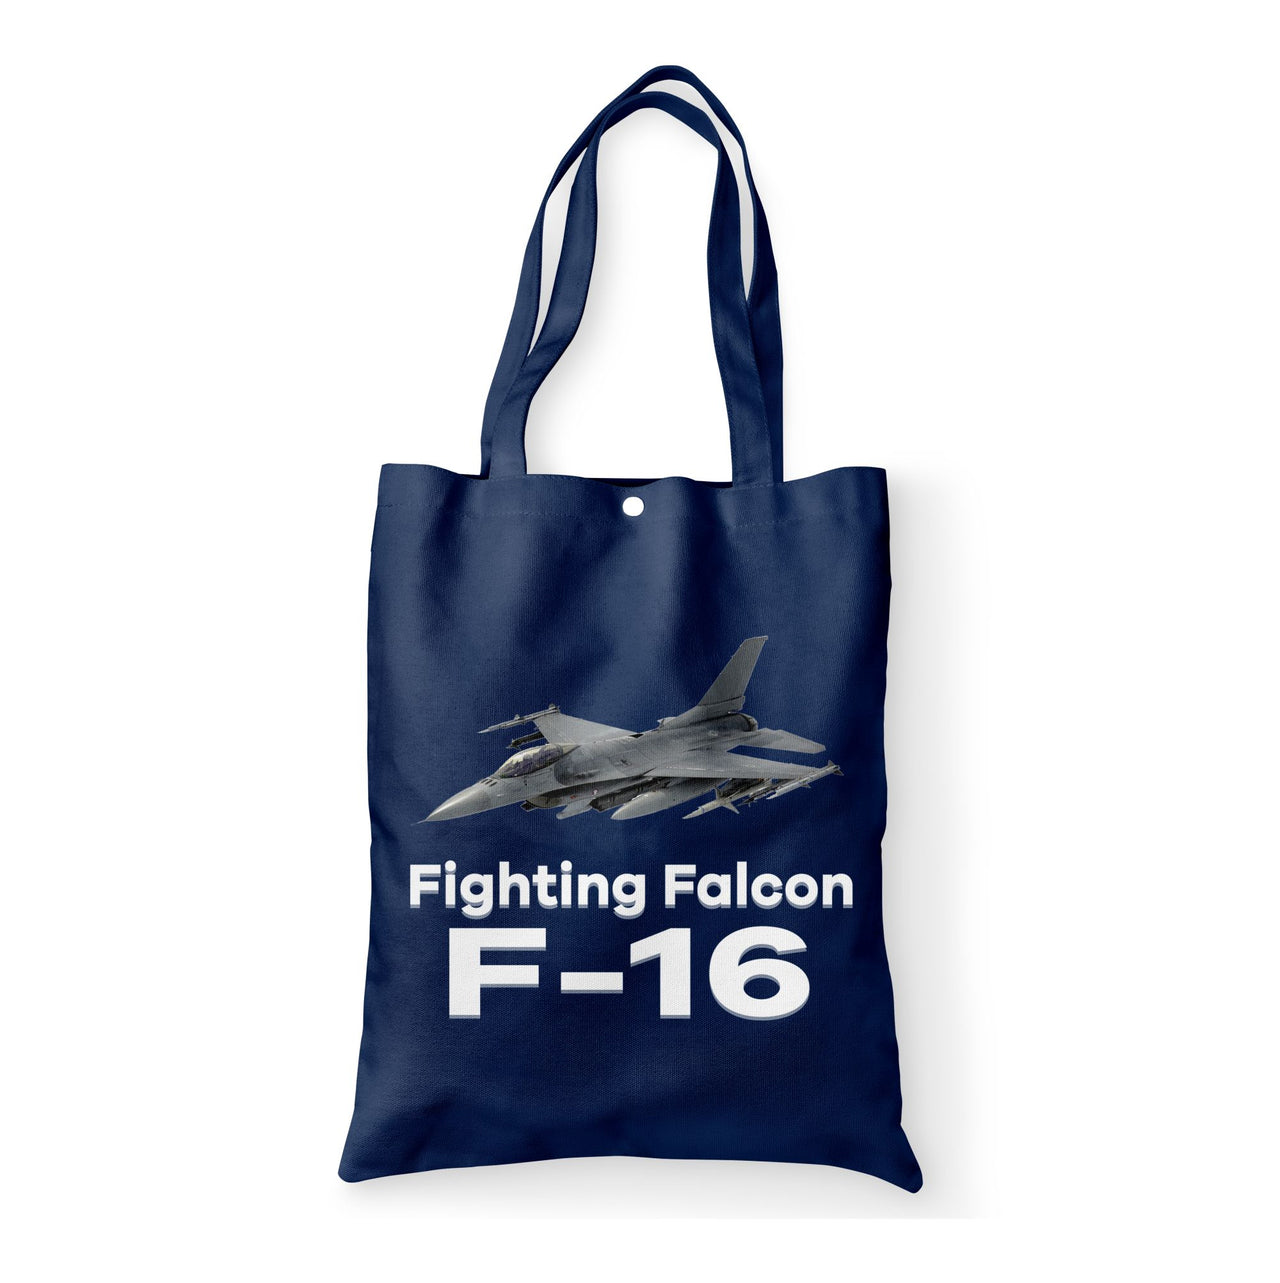 The Fighting Falcon F16 Designed Tote Bags